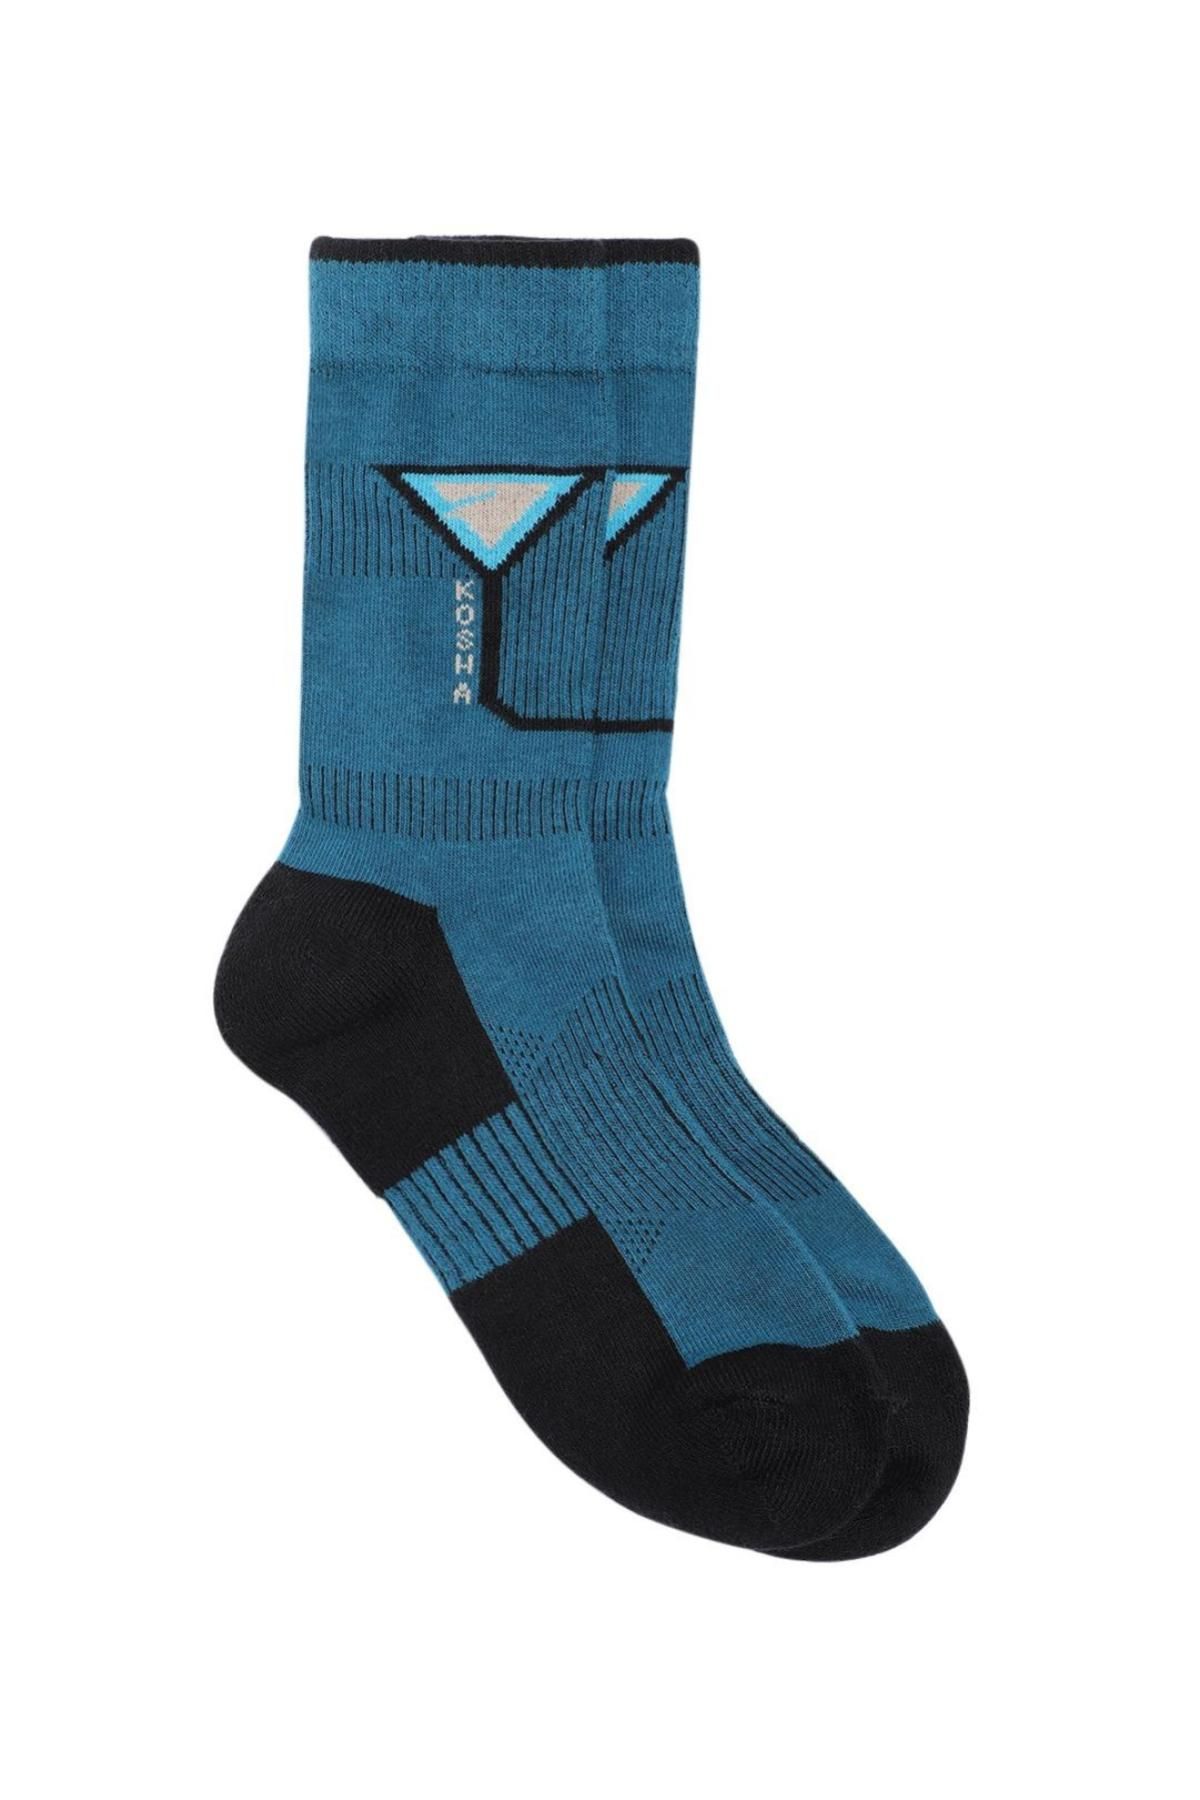 Teal & Black Regular Length Cotton Sports Socks | Men